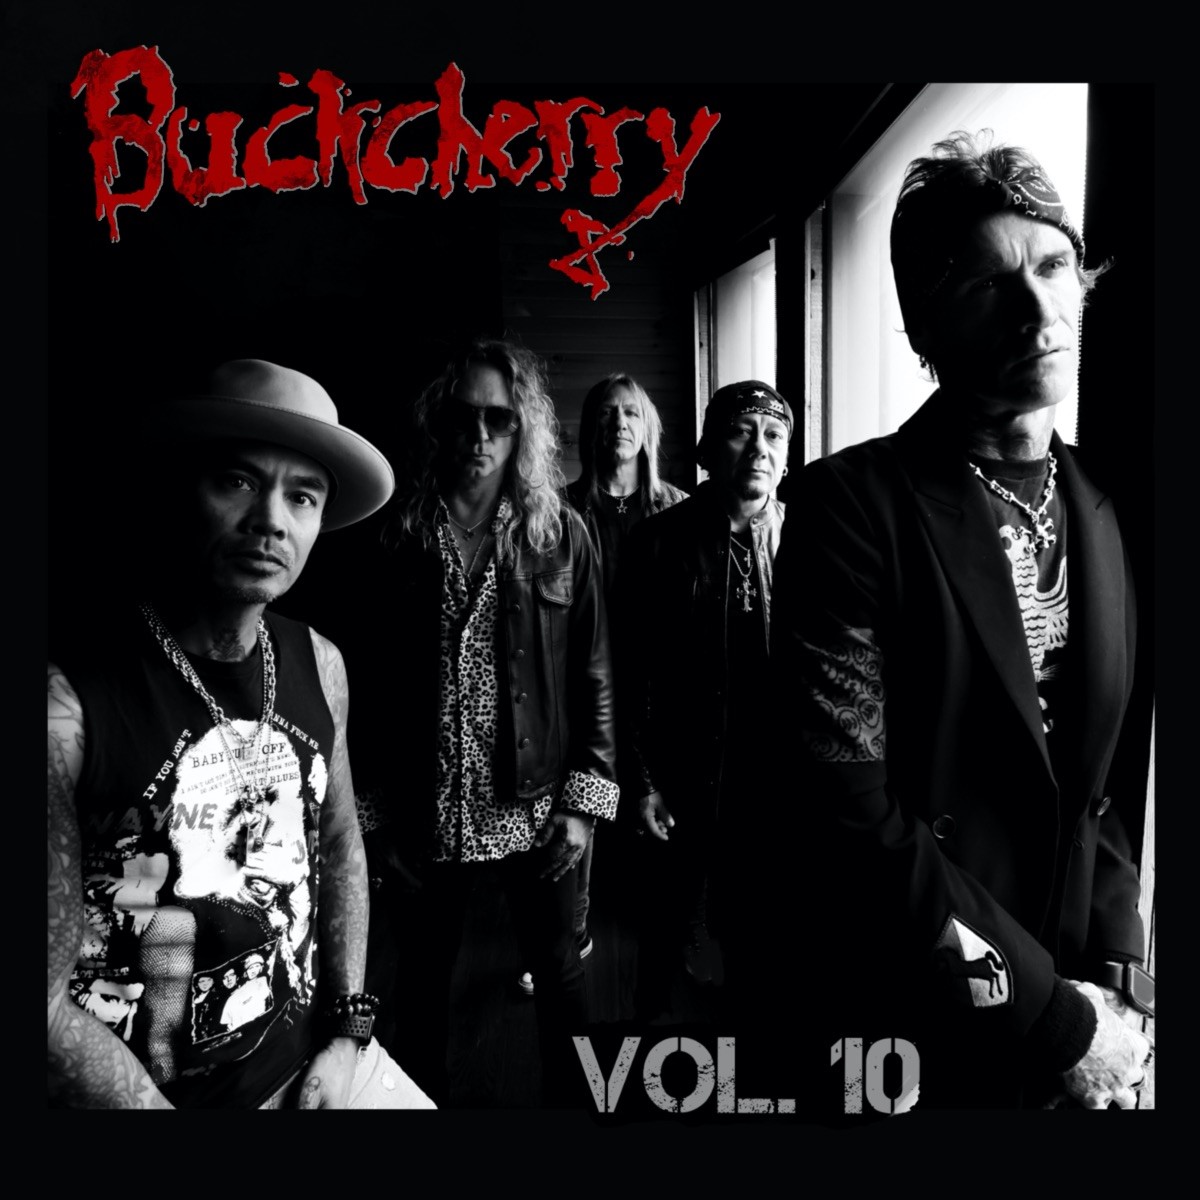 PRESS RELEASE: Buckcherry Announce New Album “Vol. 10” + Share “Good Time”